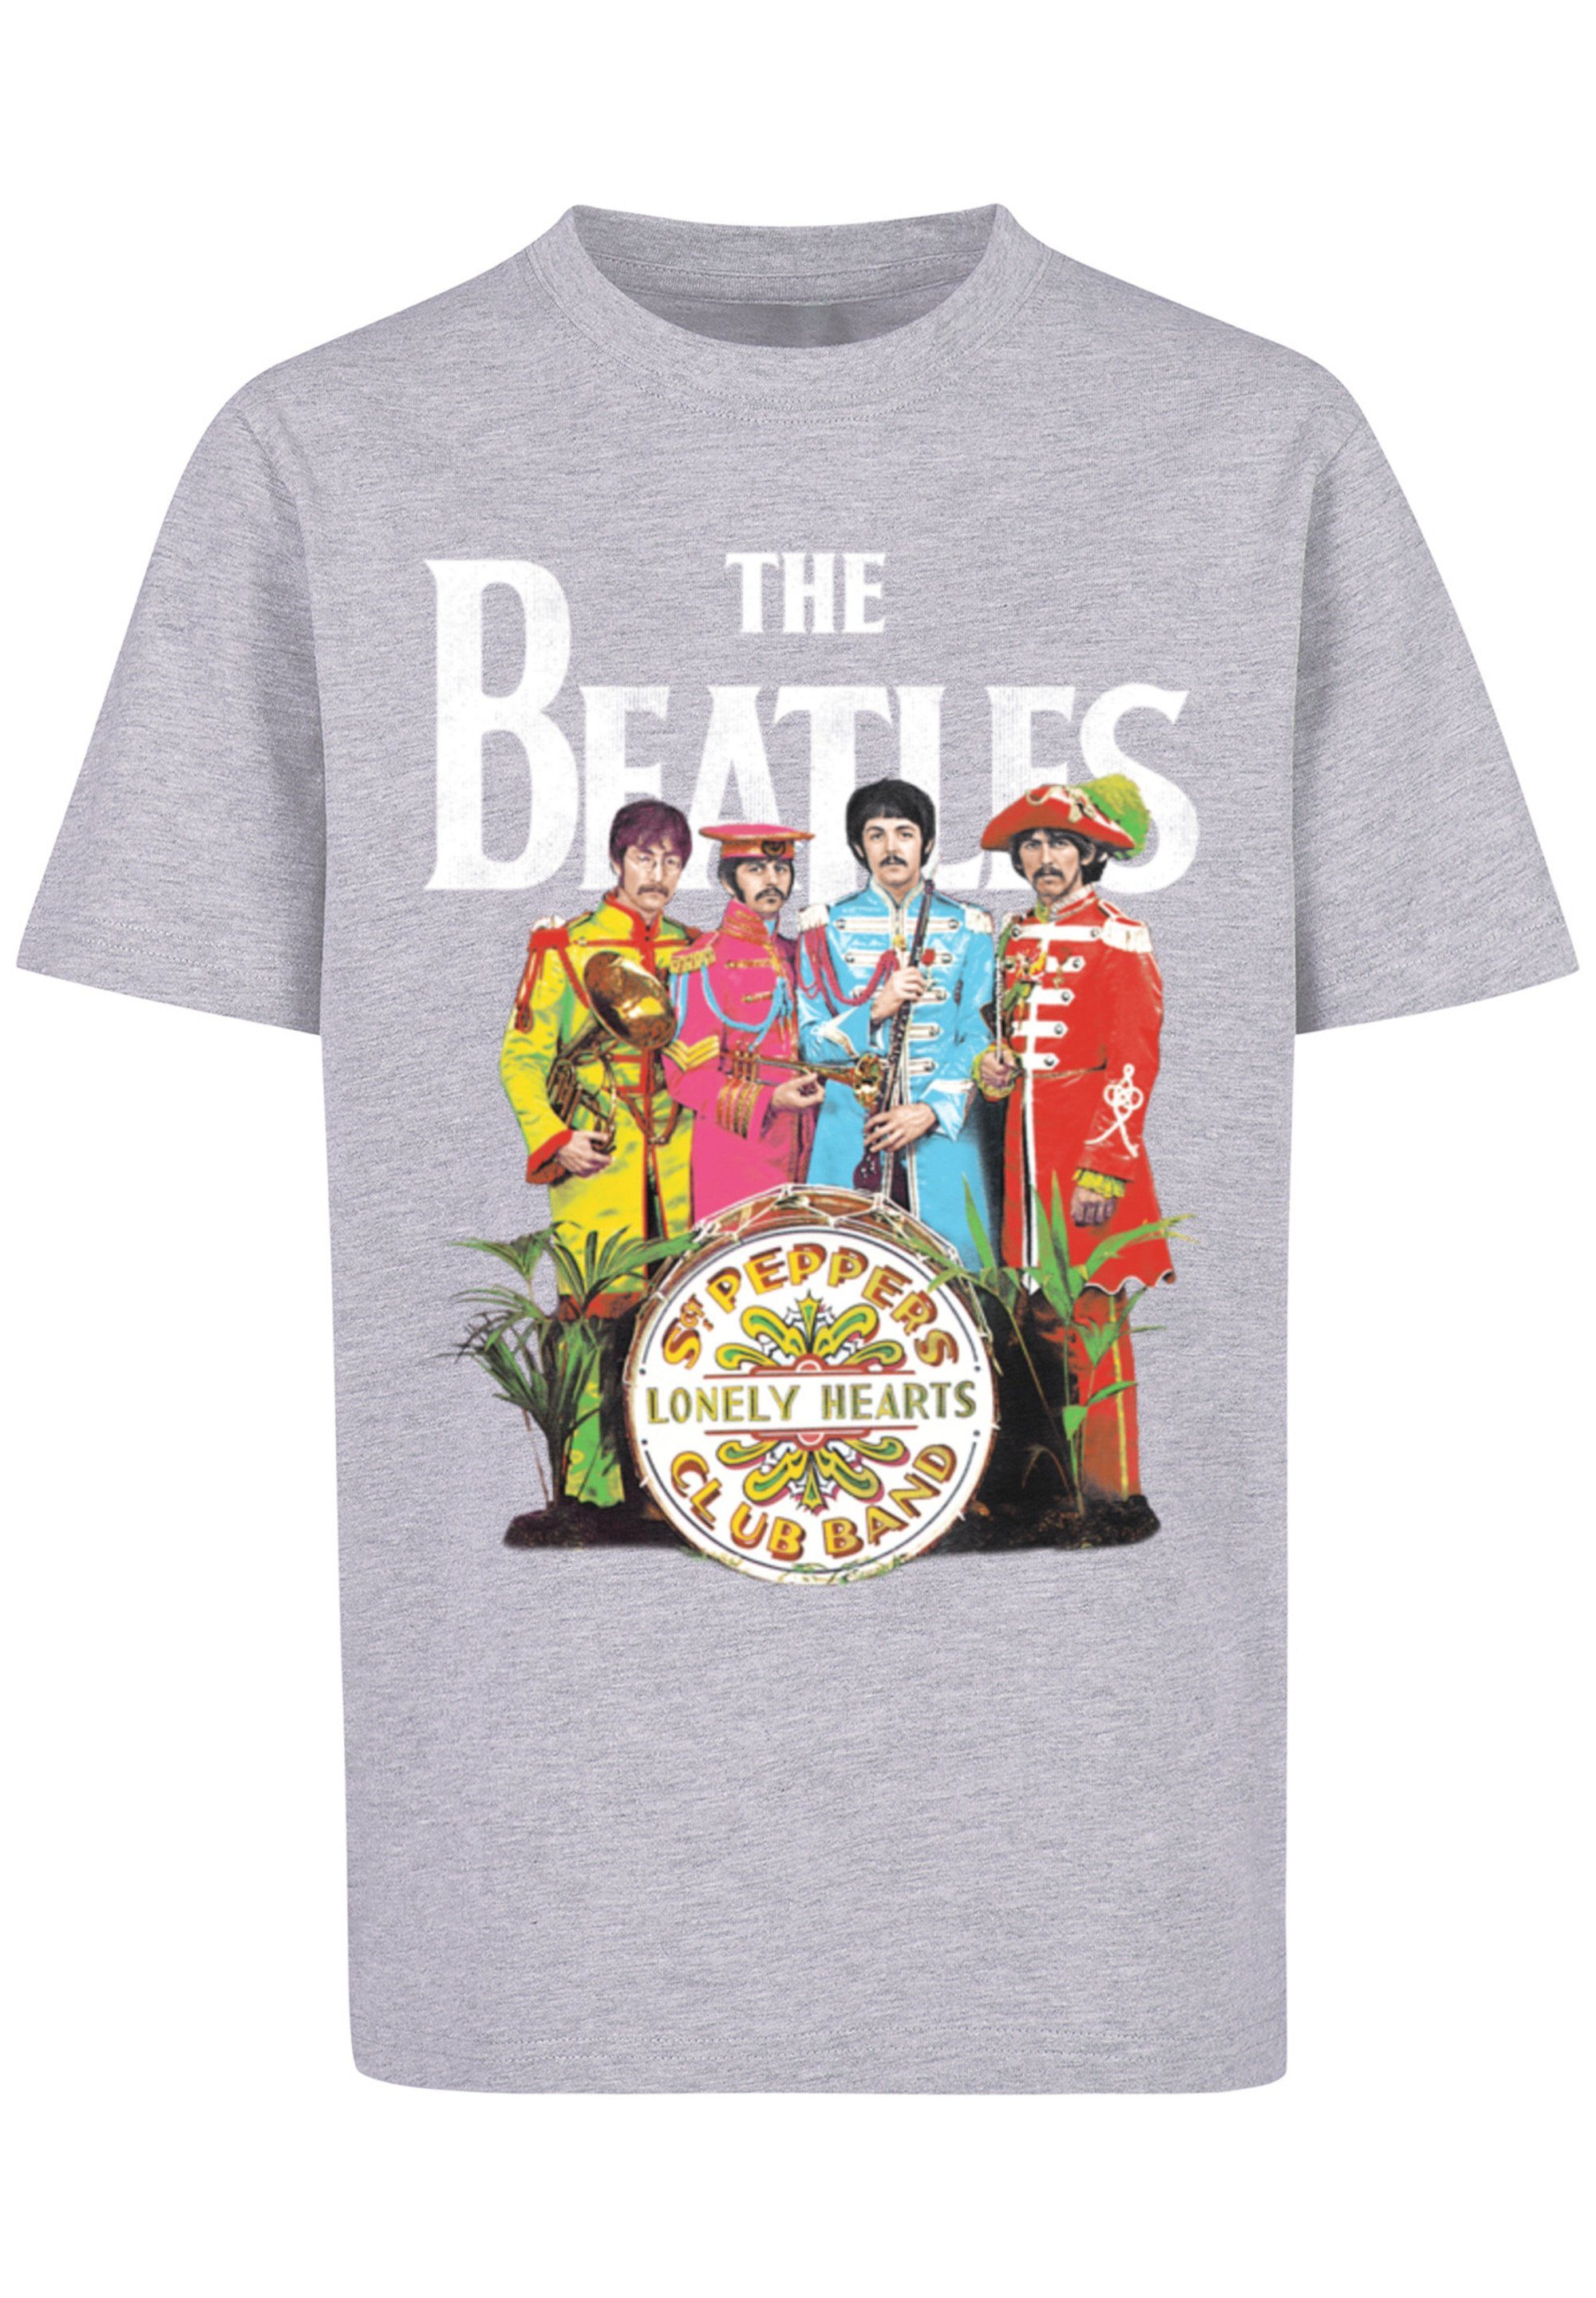 The heather F4NT4STIC Sgt Print T-Shirt Band Beatles grey Pepper Black